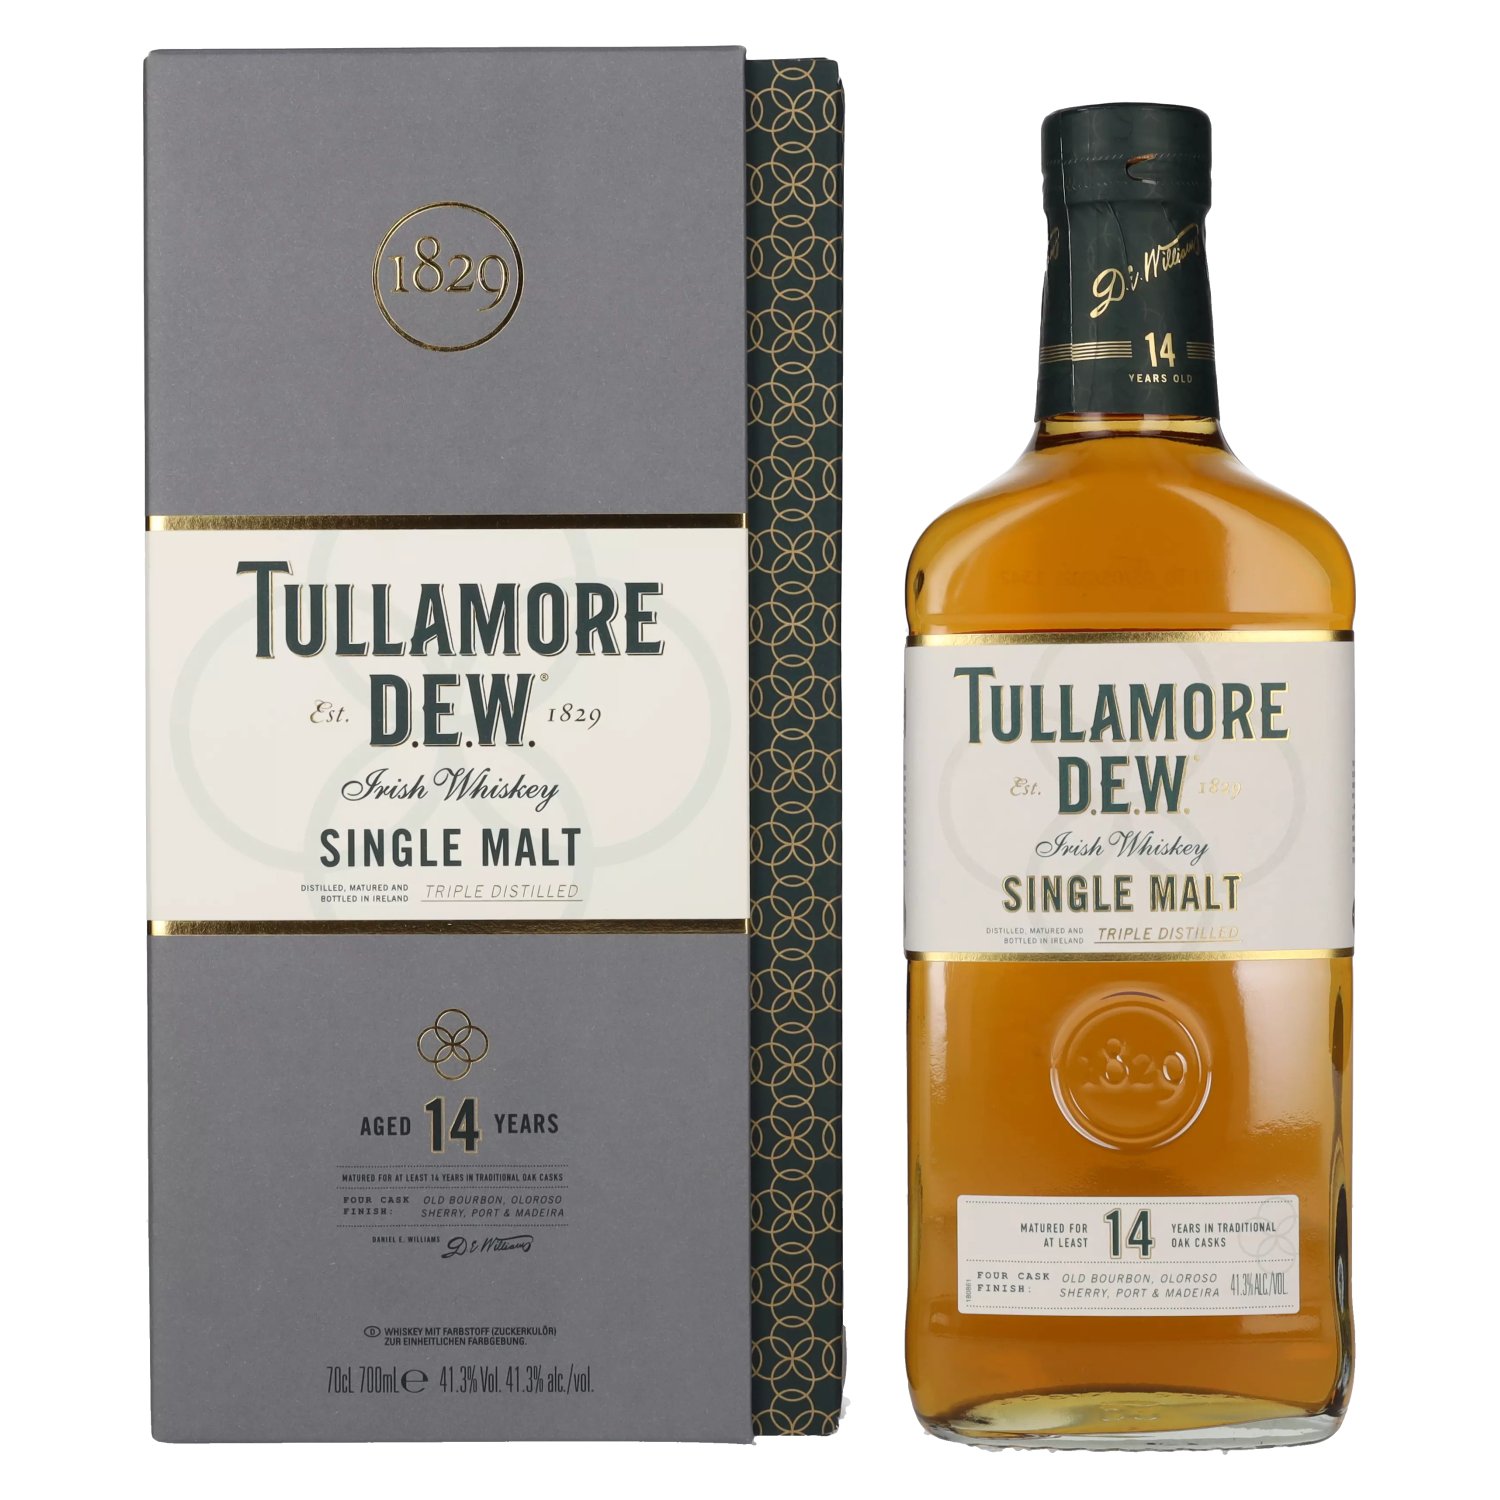 Tullamore D.E.W. Tullamore Dew 14y Single Malt 41,3% 0,7L v kazete